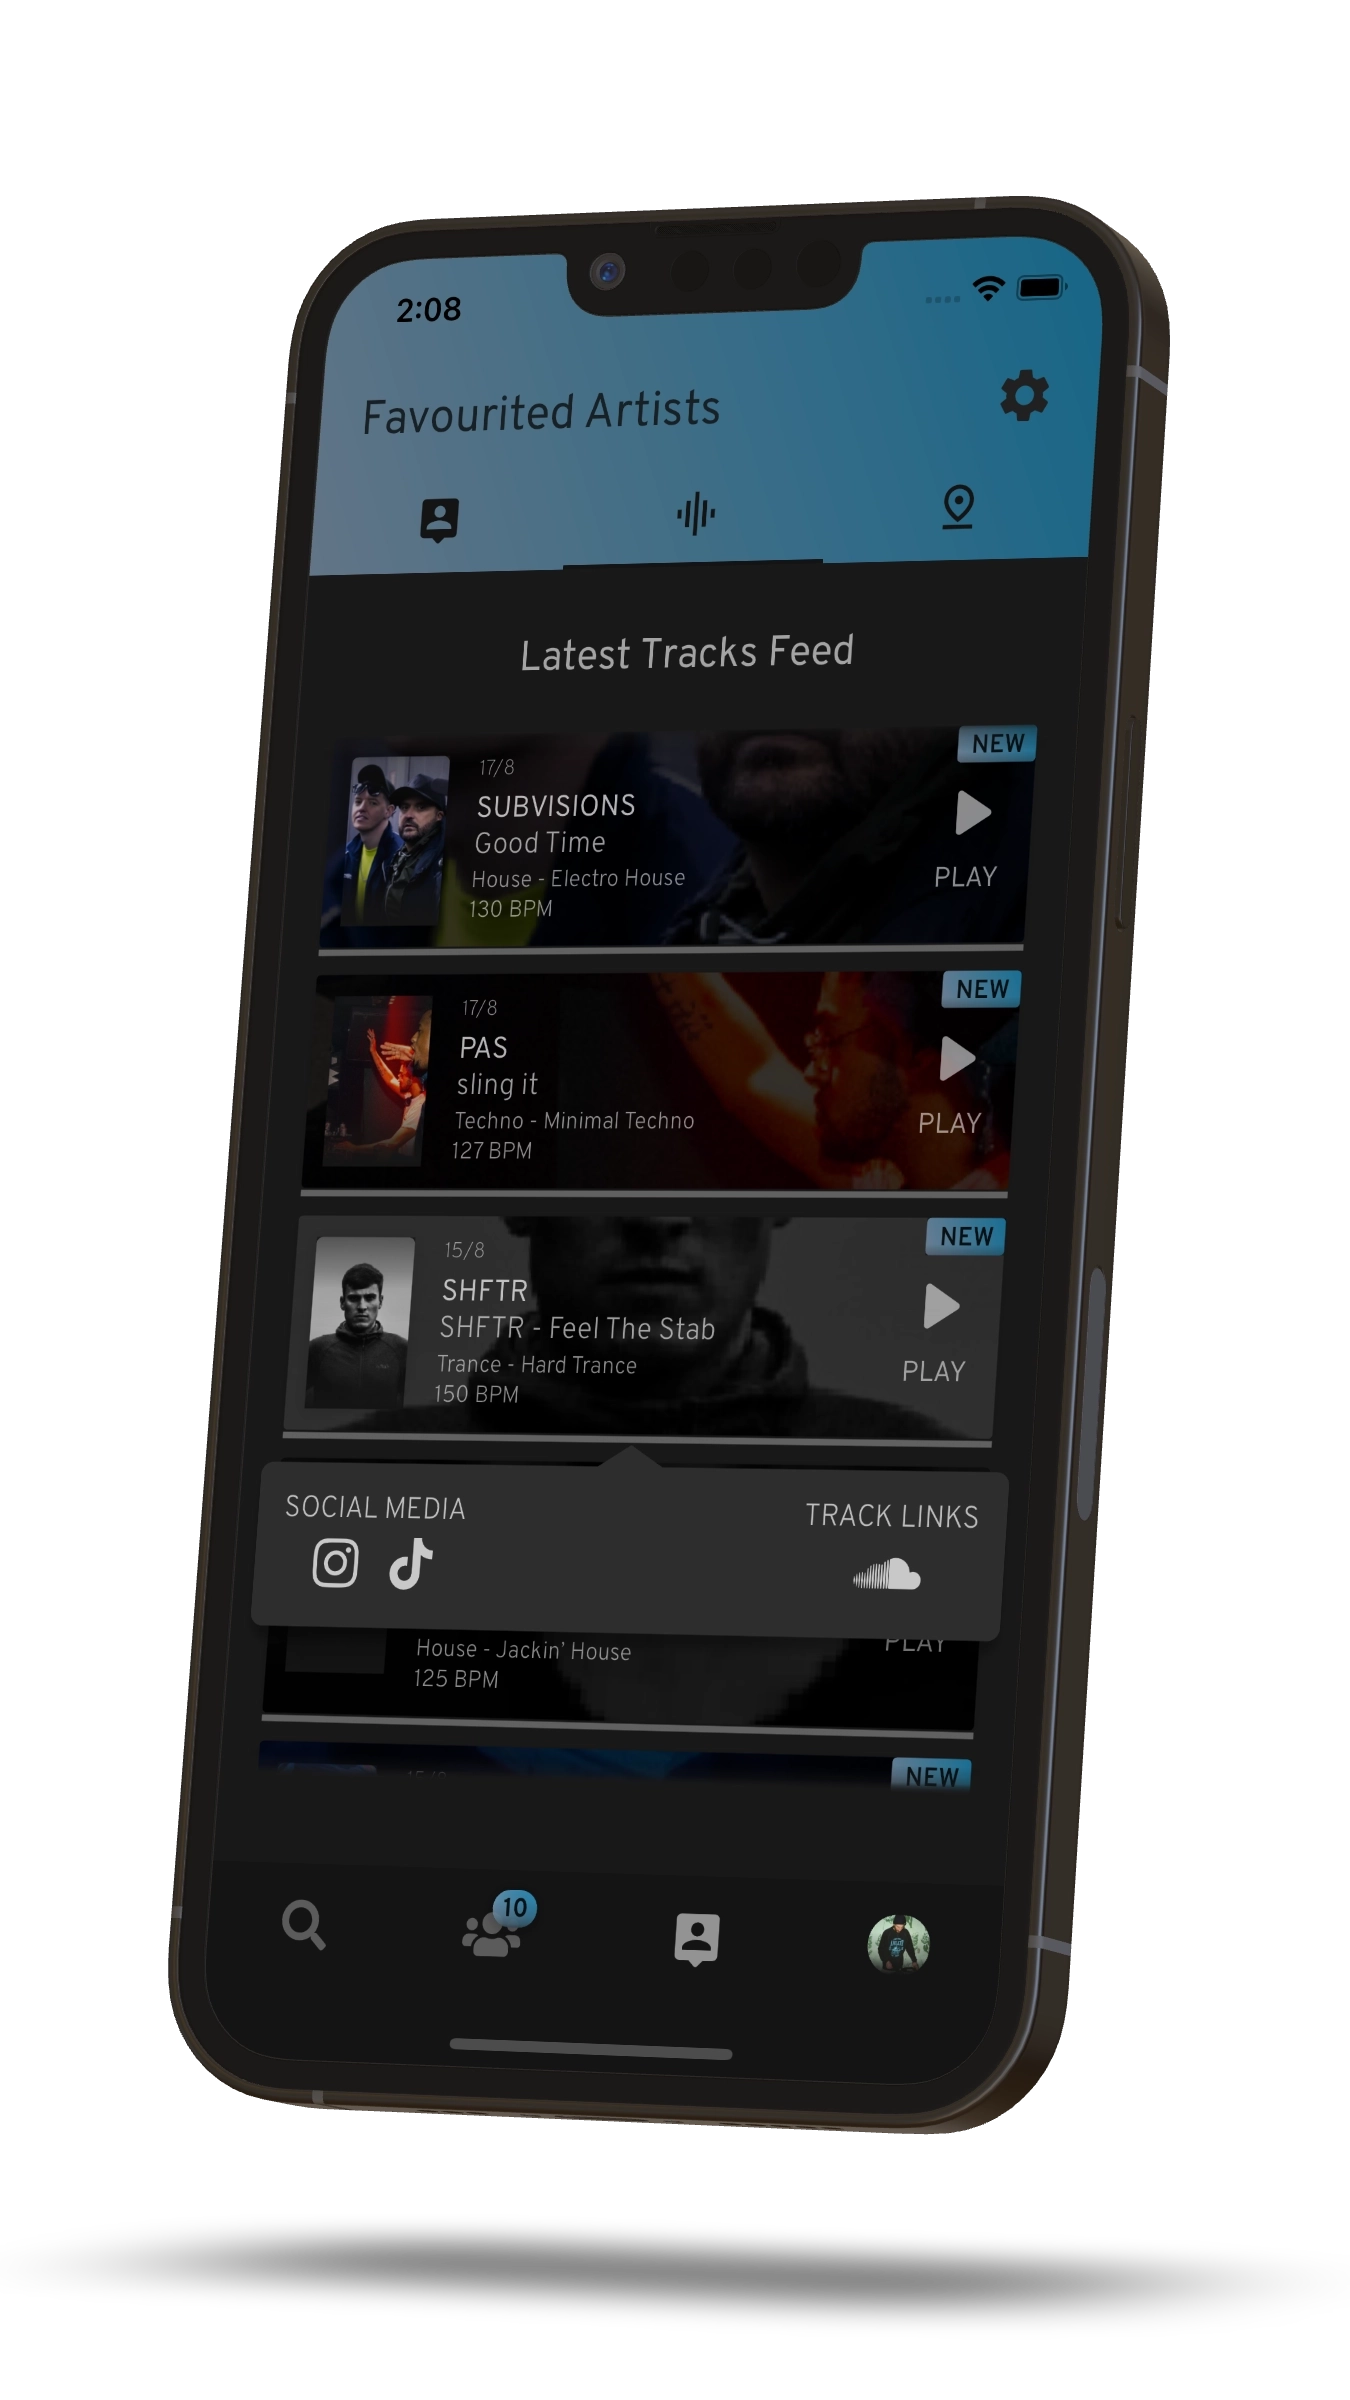 Mobile App Mockup - Tracks Feed Page